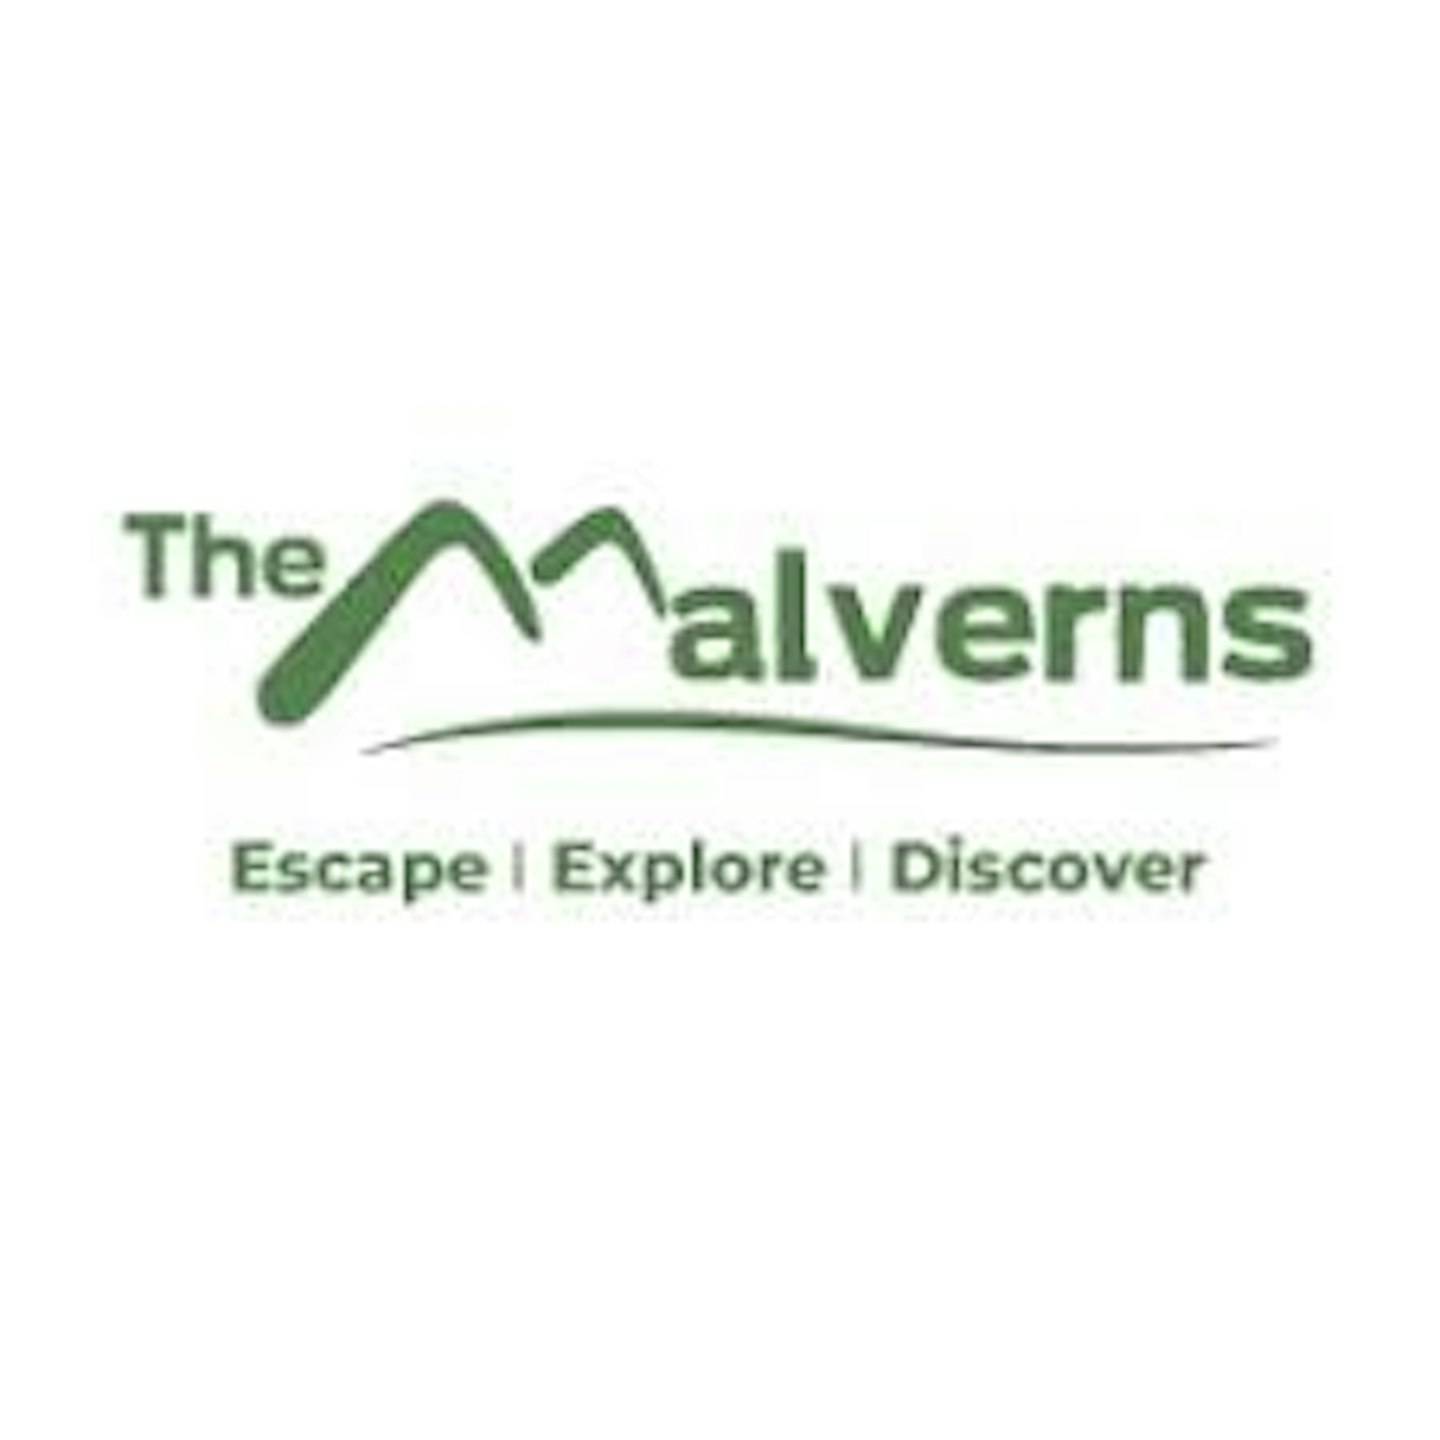 Visit the Malverns logo